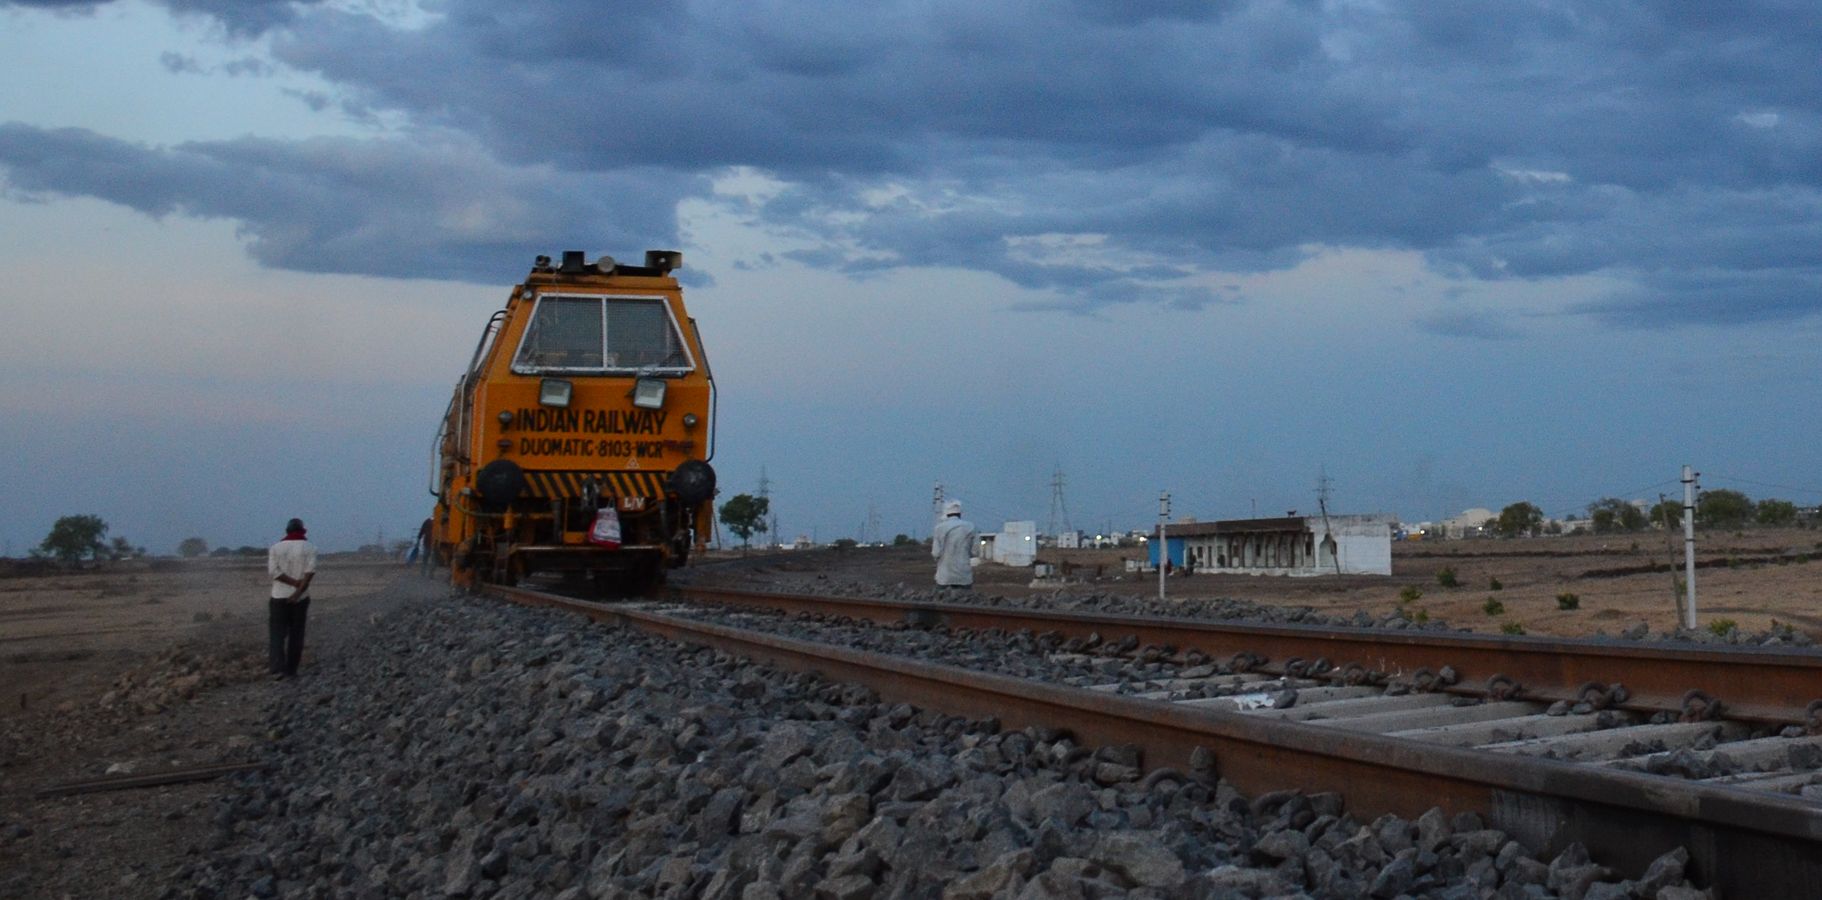 khandwa sanawad broad gauge Line work And News Update